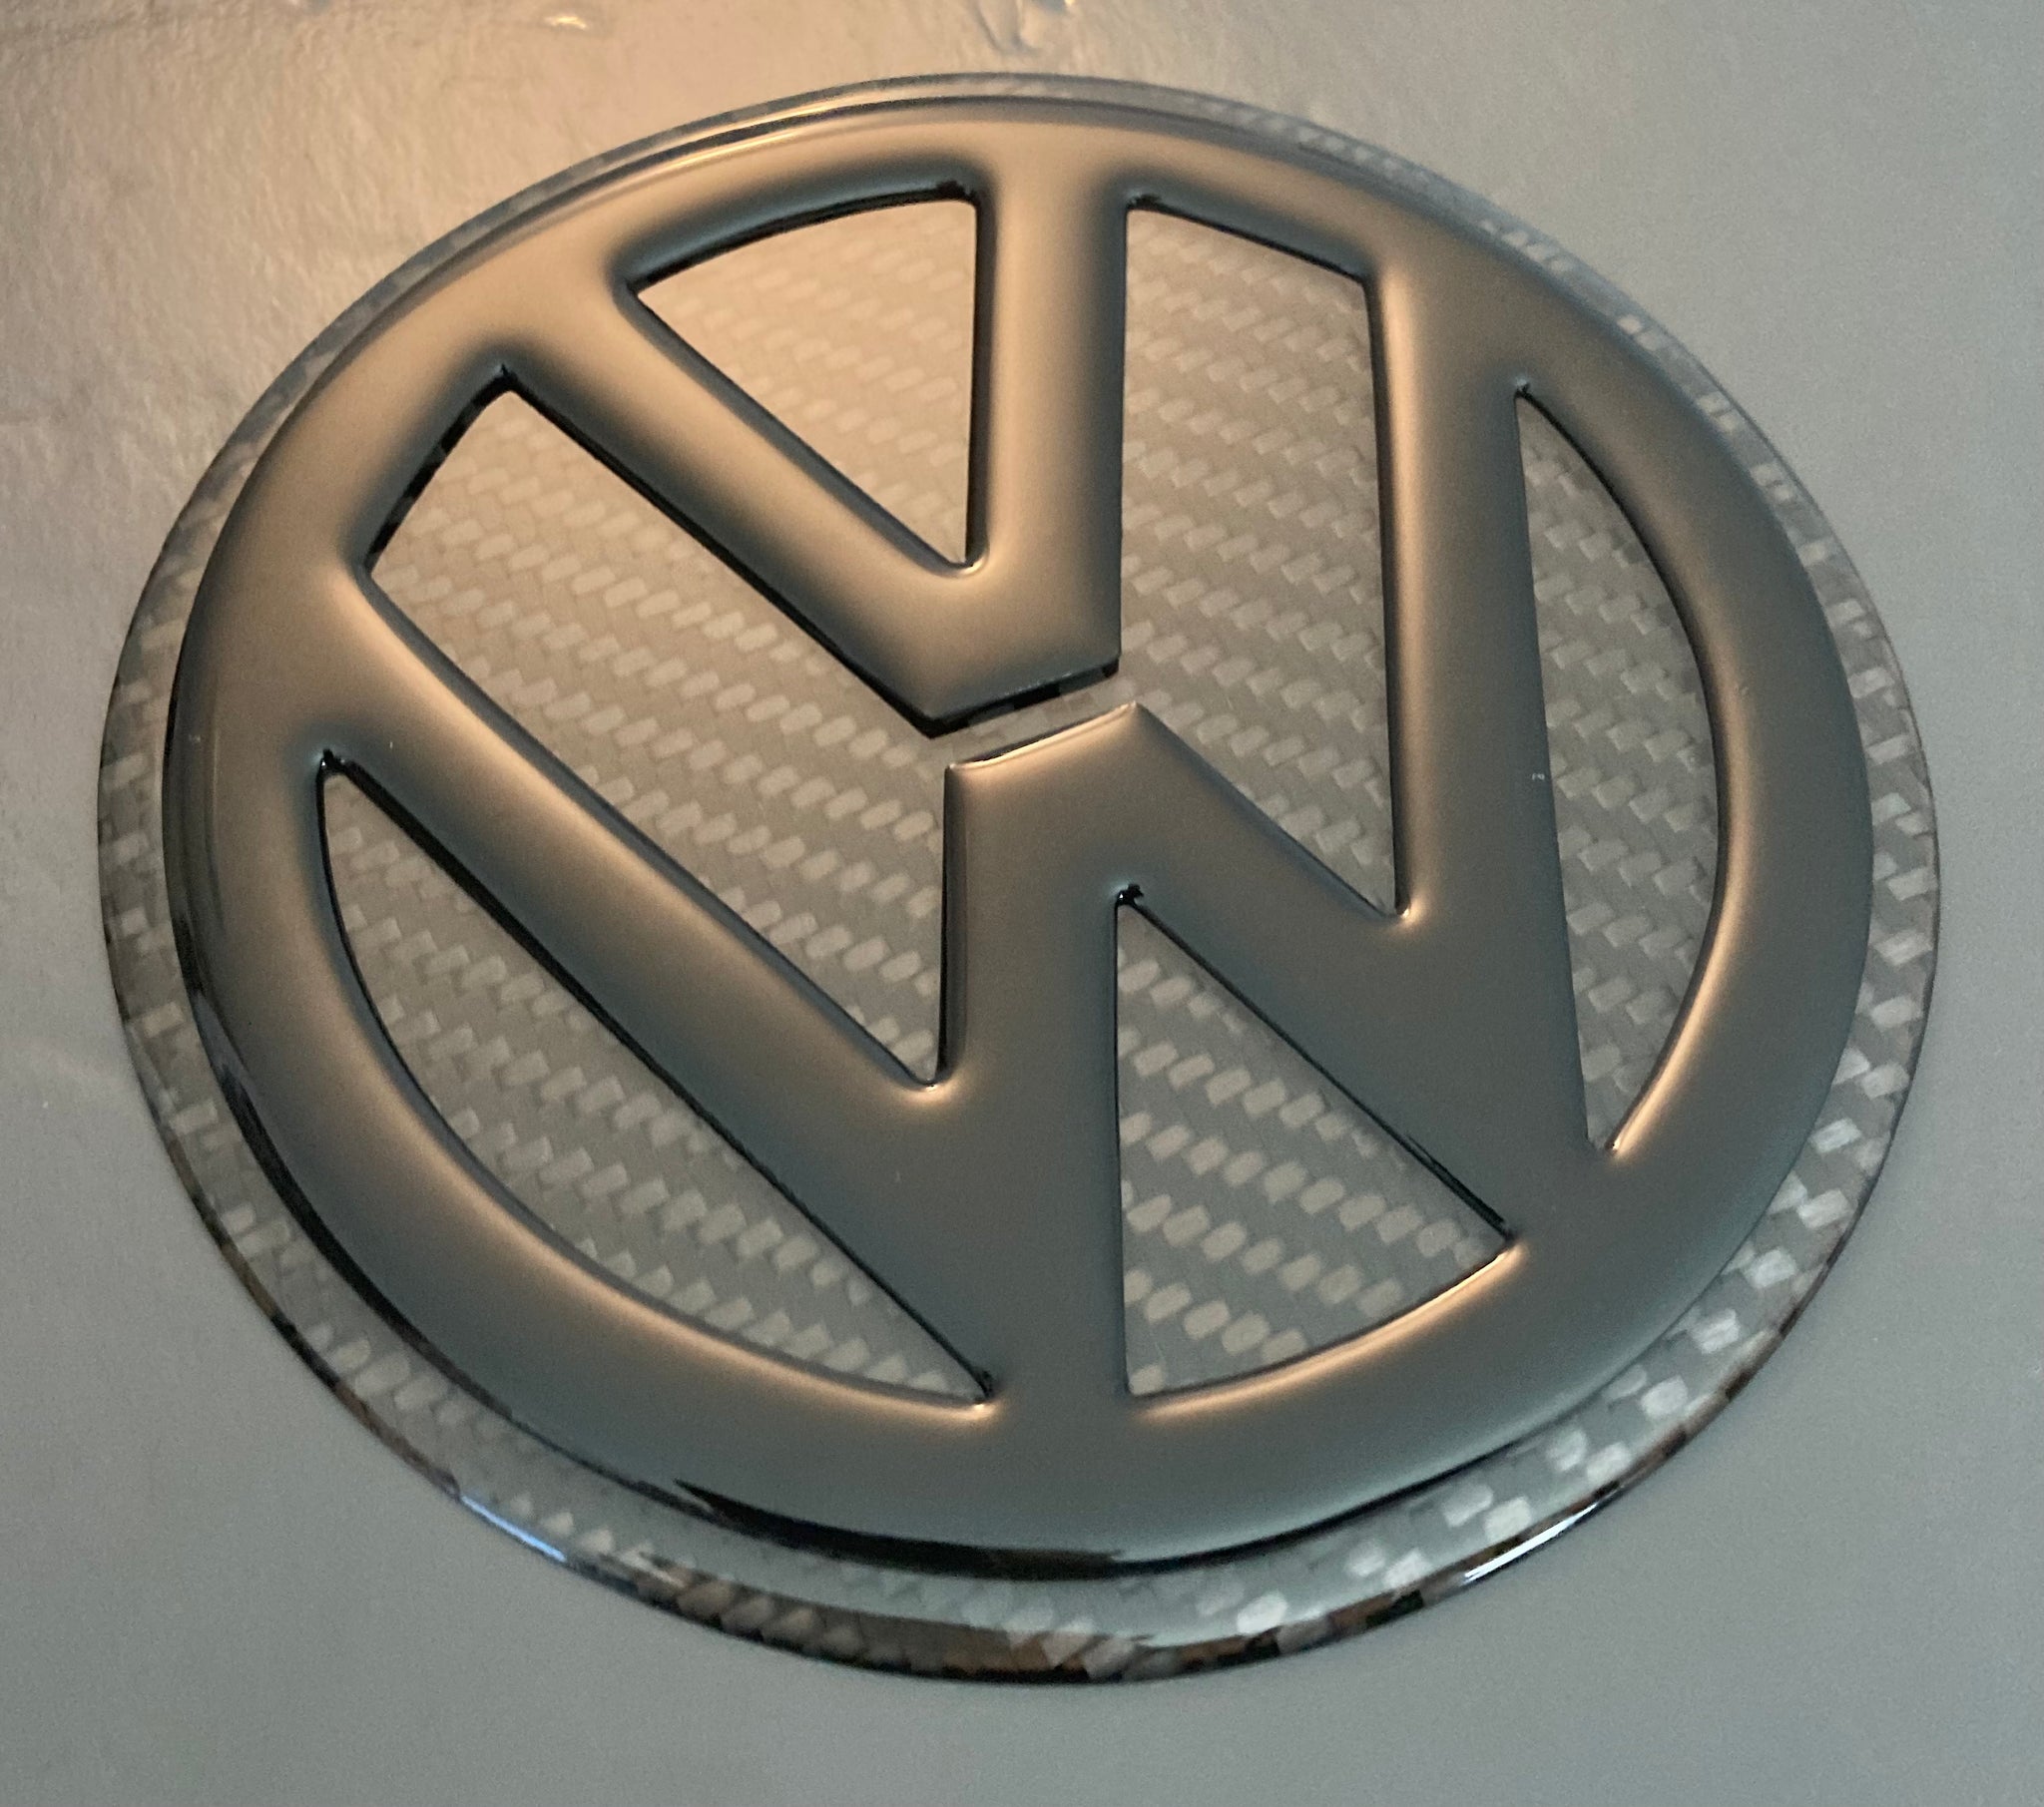 Volkswagen Emblem (Most Colors Available) – Custom Carbon Emblems